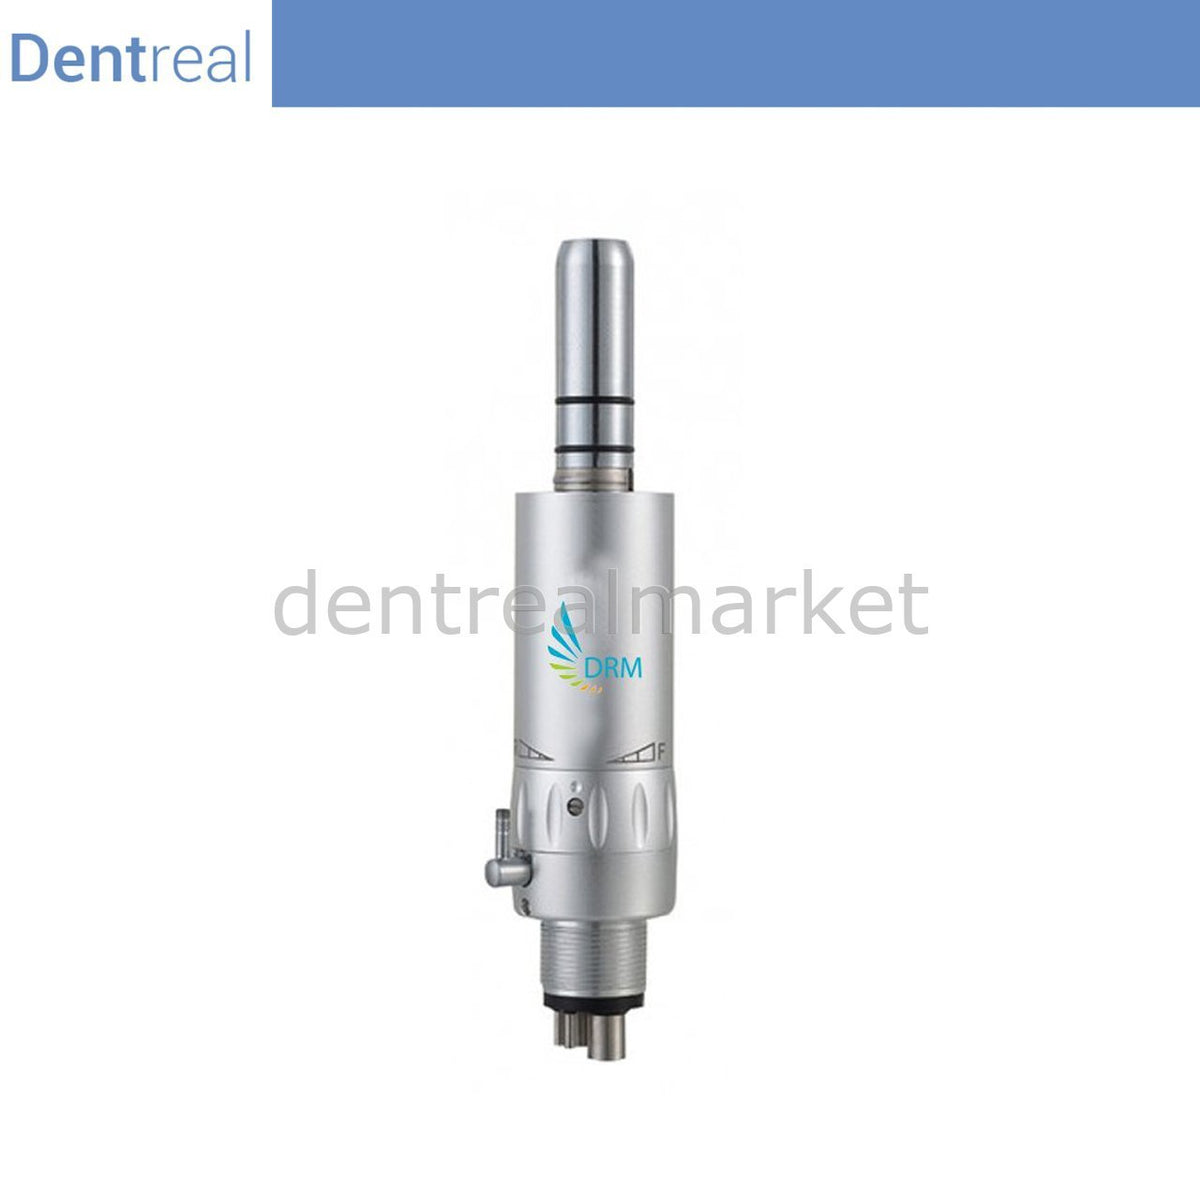 DentrealStore - Dentreal External Water Air Micromotor